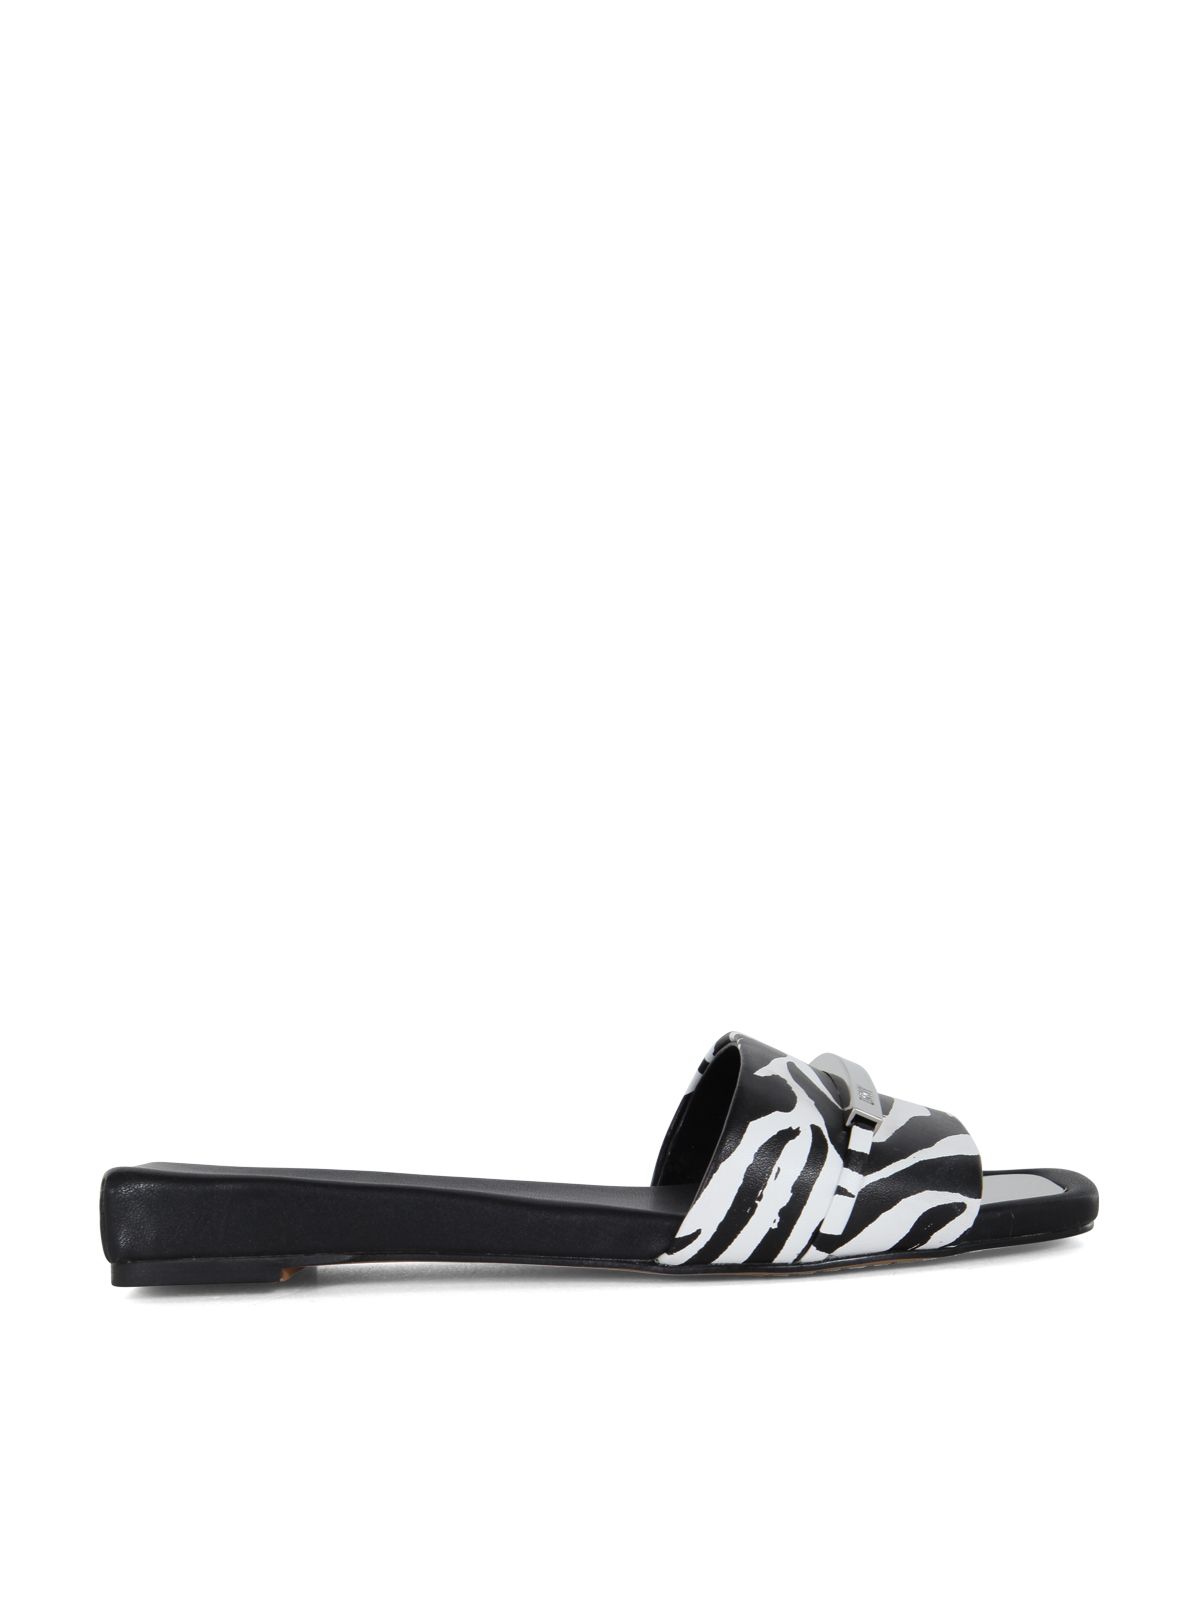 Shop Dkny Women's Sandals: Alaina Flat Slide 25mm